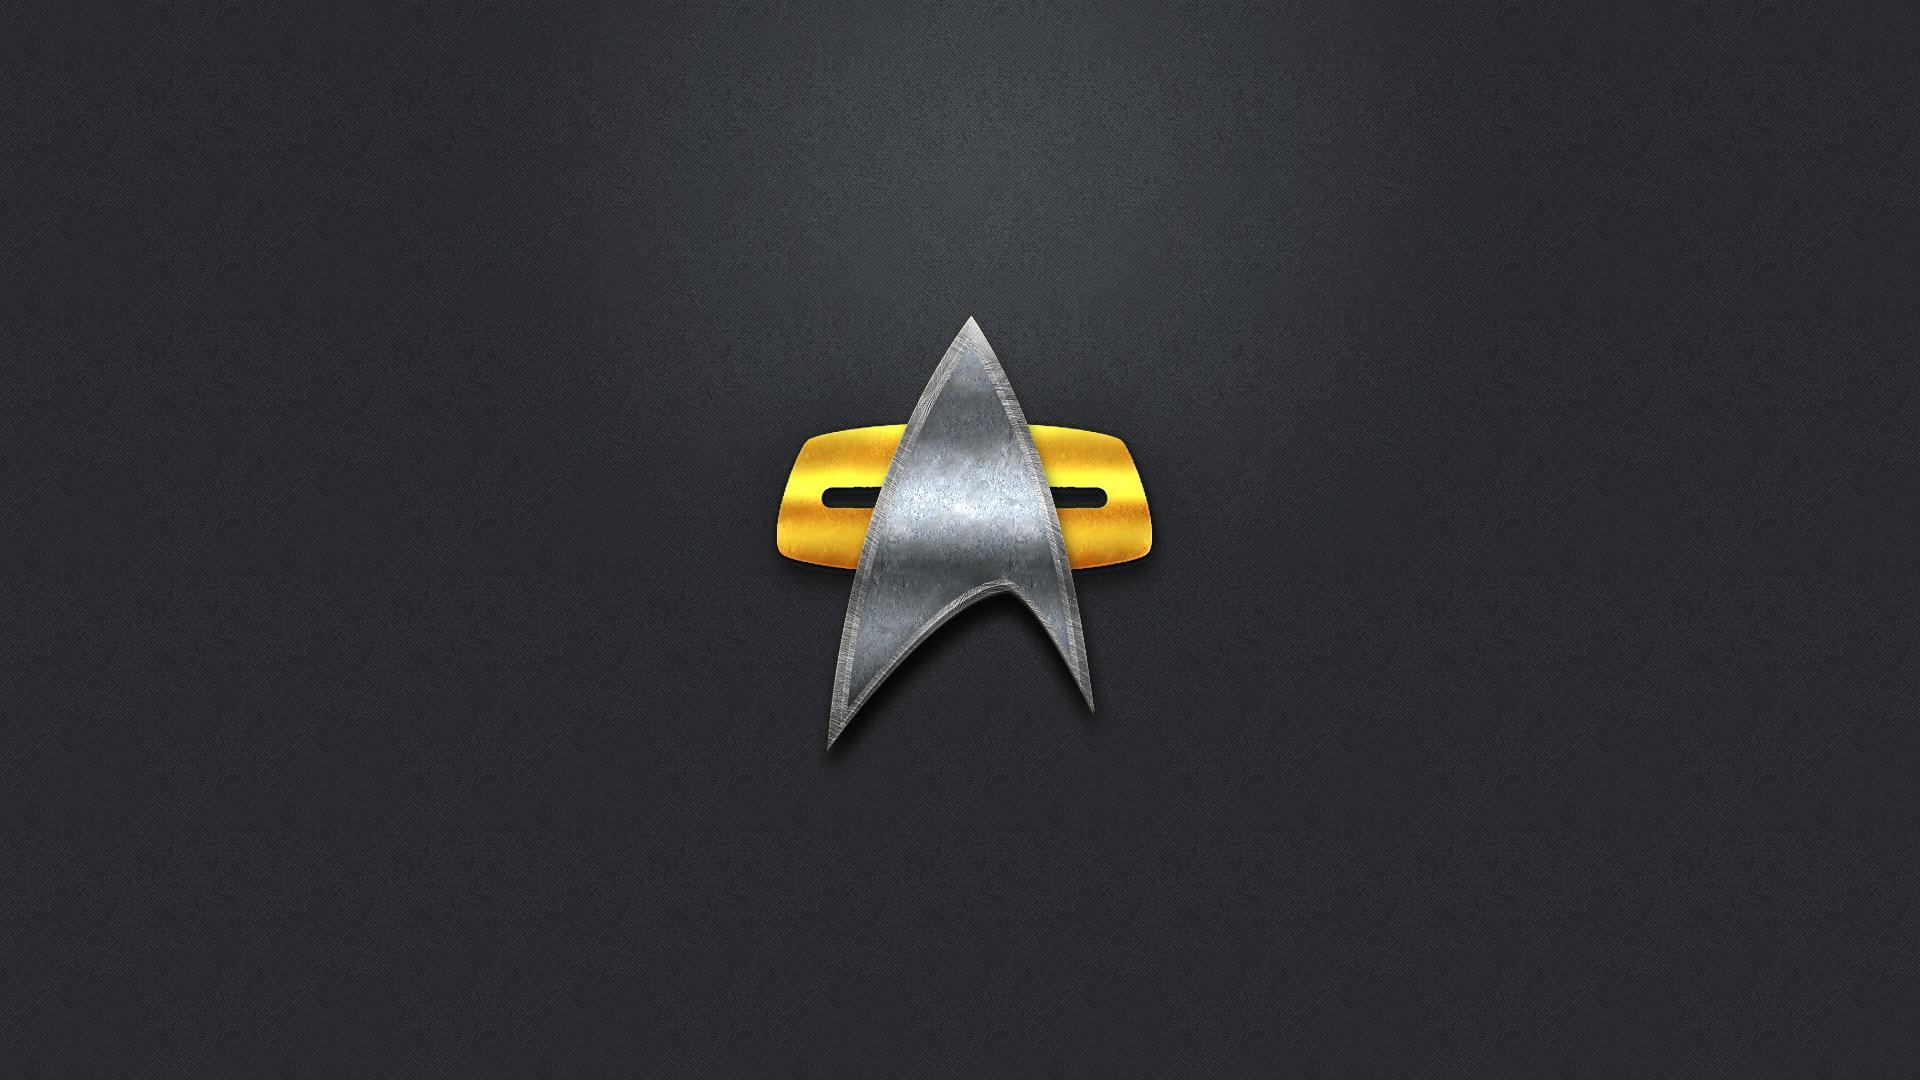 Logos For > Star Trek Insignia Wallpaper HD